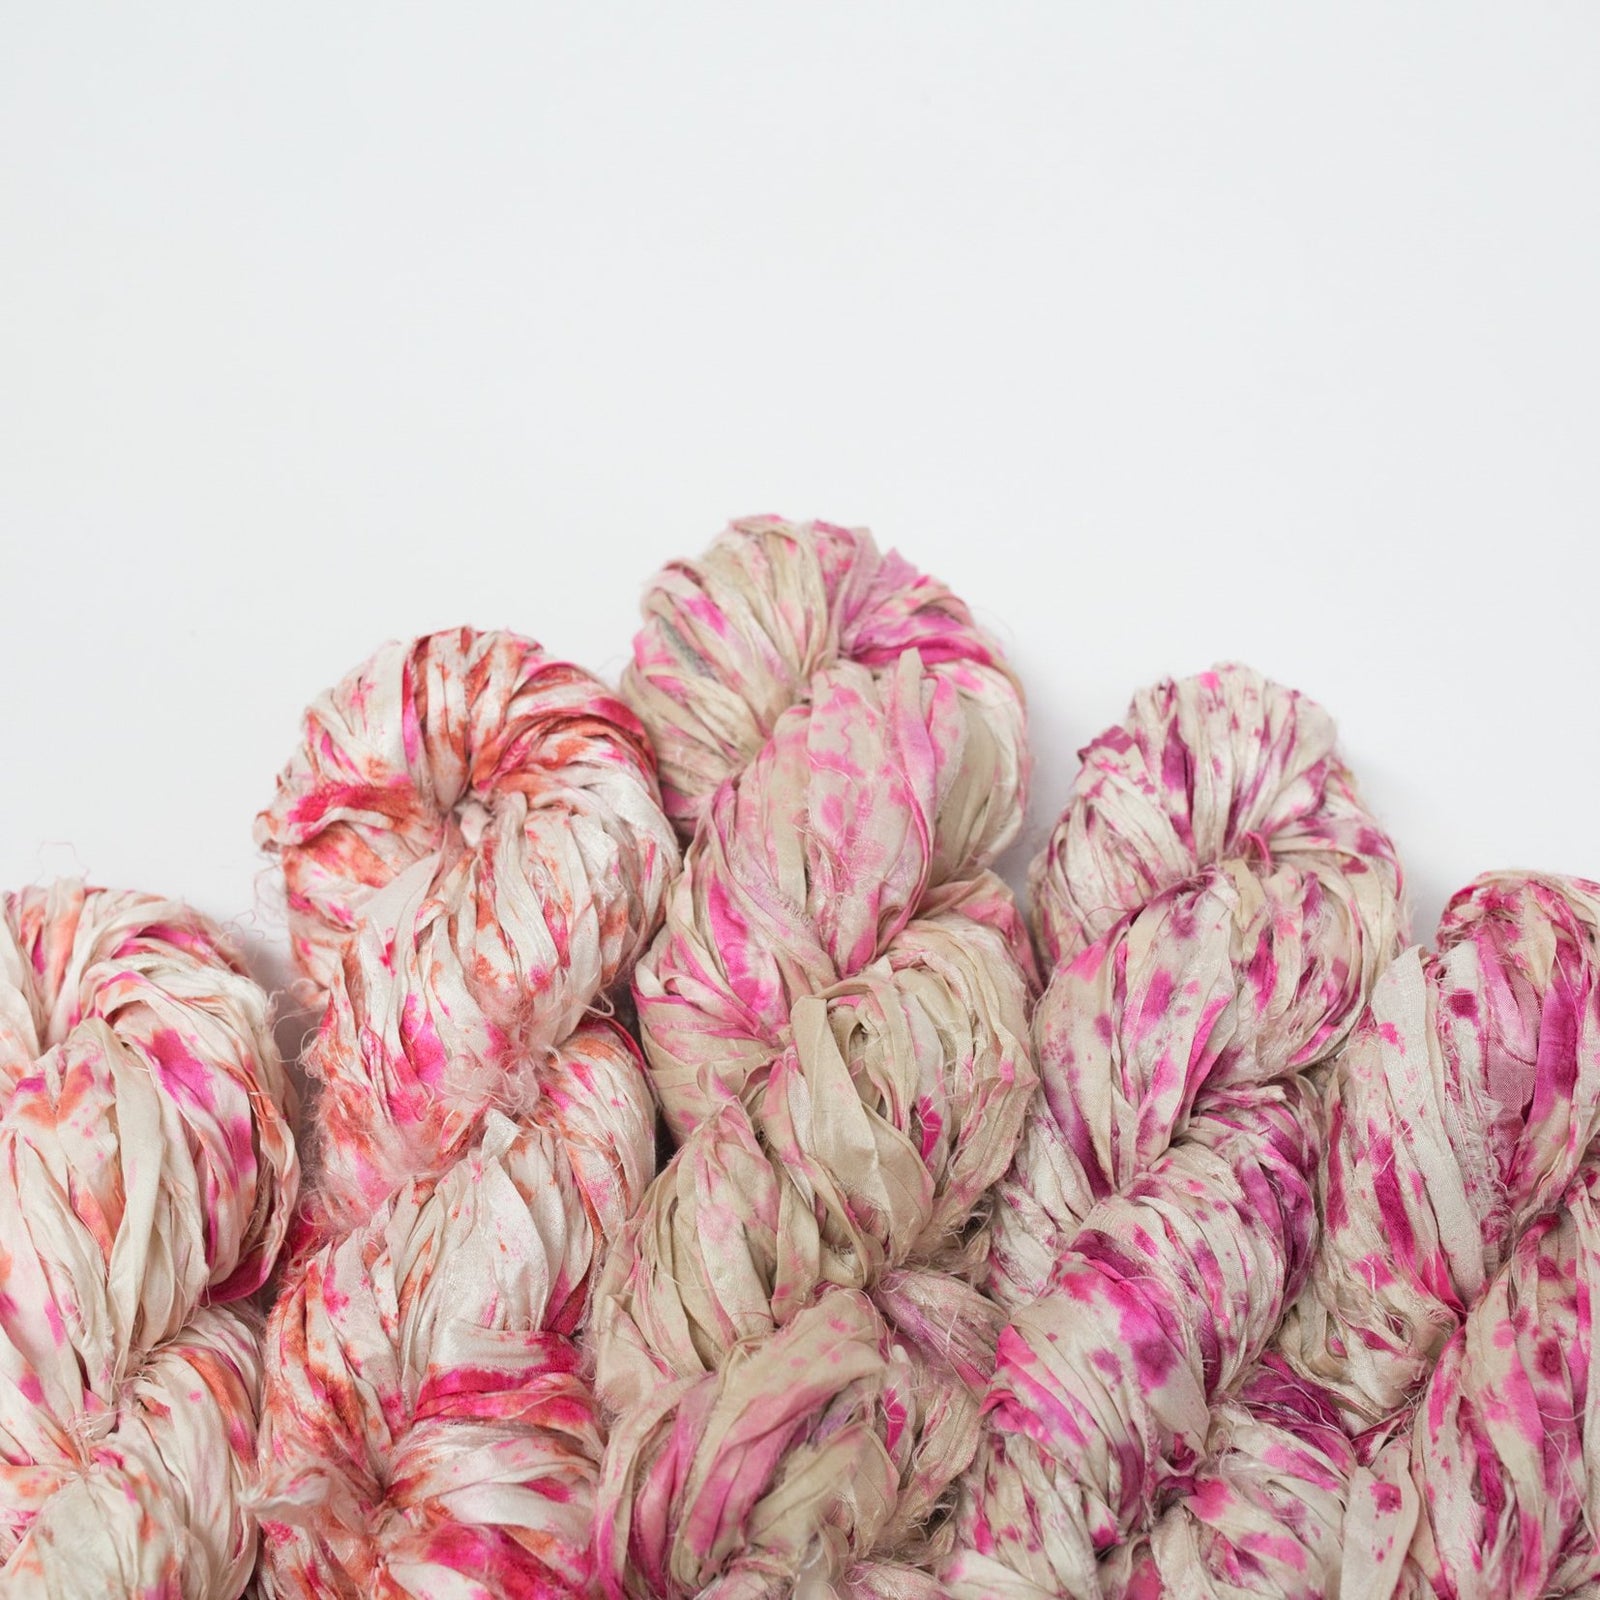 Knitting Needles - Mary Maker Studio - Macrame & Weaving Supplies and  Education.